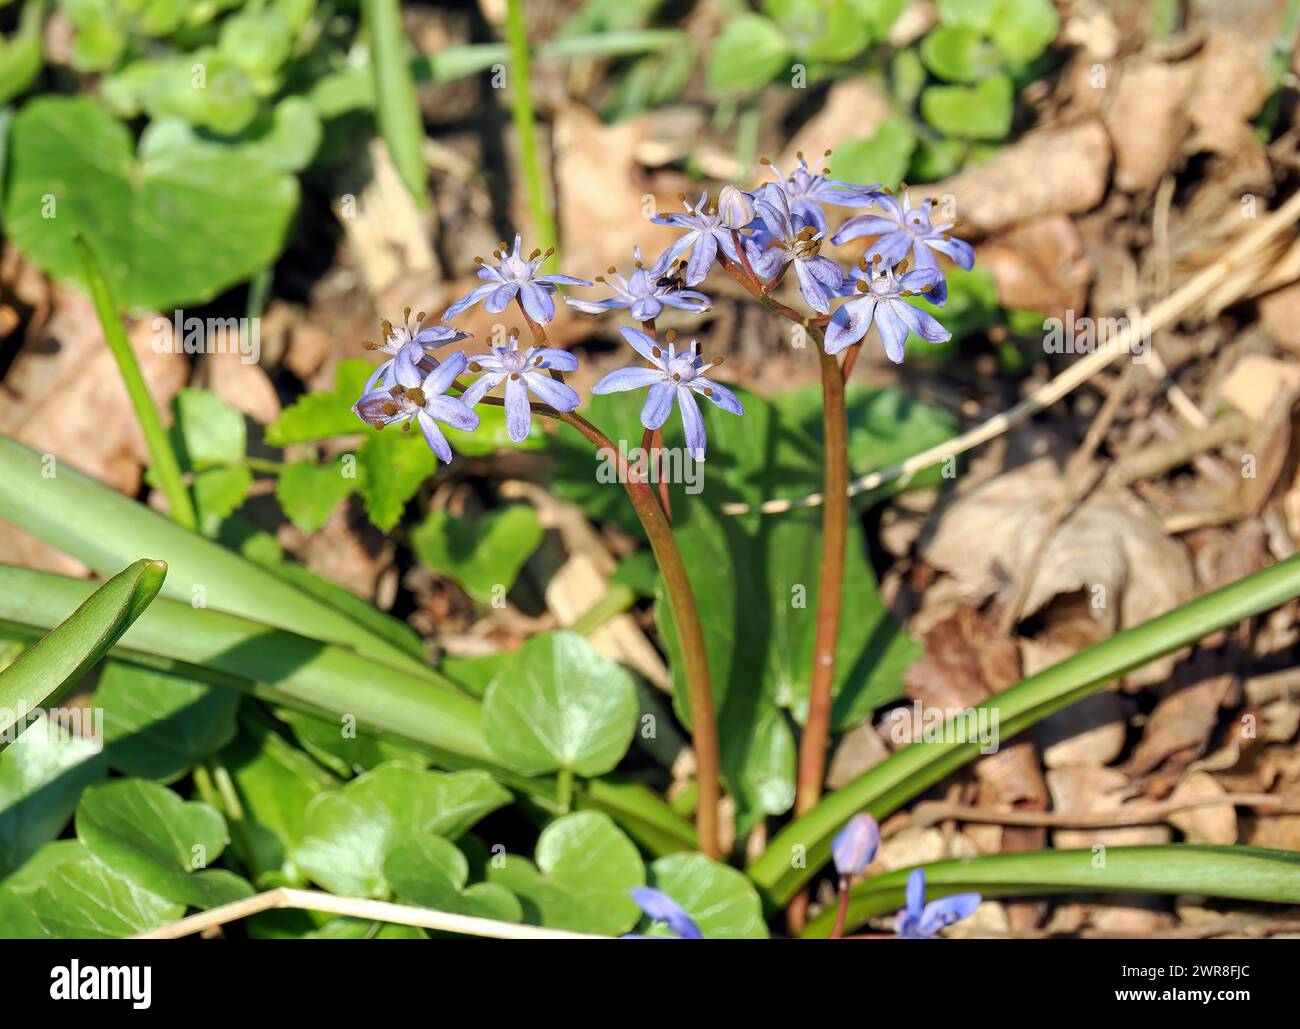 squill, Blaustern, Scilla vindobonensis, ligeti csillagvirág, Hungary, Magyarország, Europe Stock Photo